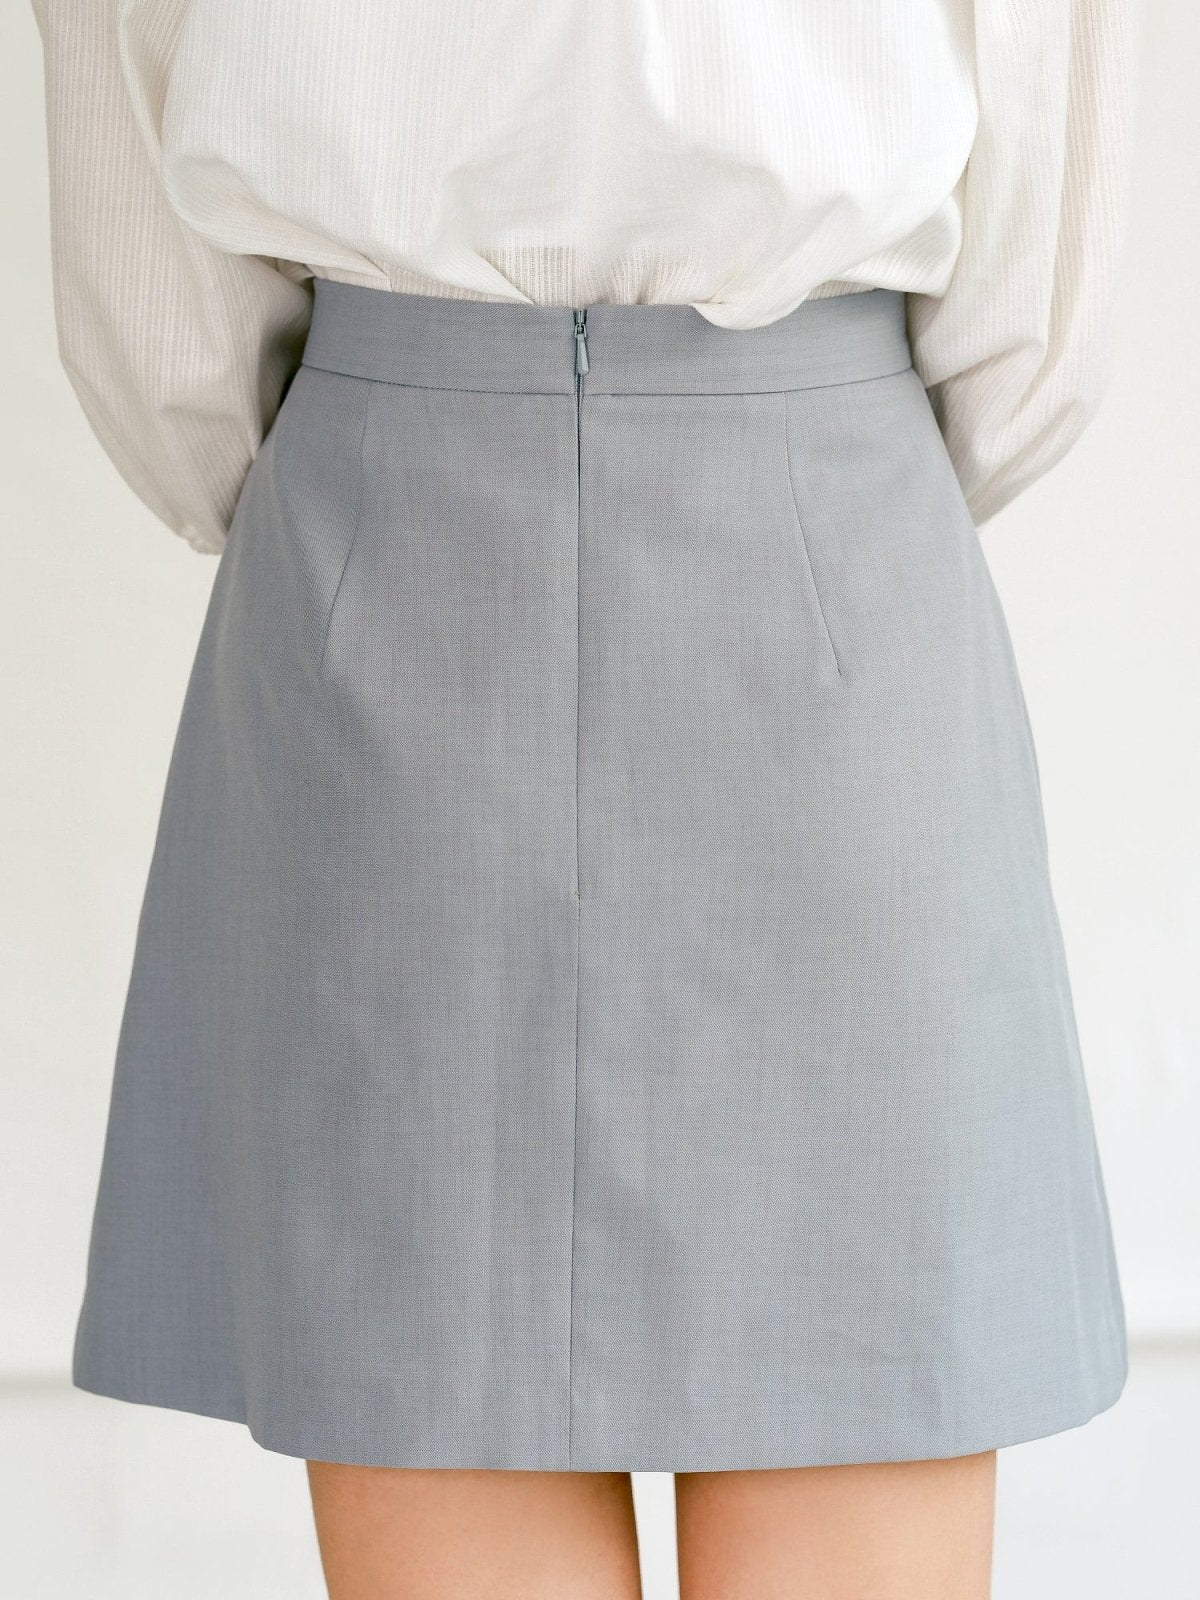 Pearl Pleated Skirt - DAG-DD0208-23BabyBlueS - Baby Blue - S - D'ZAGE Designs